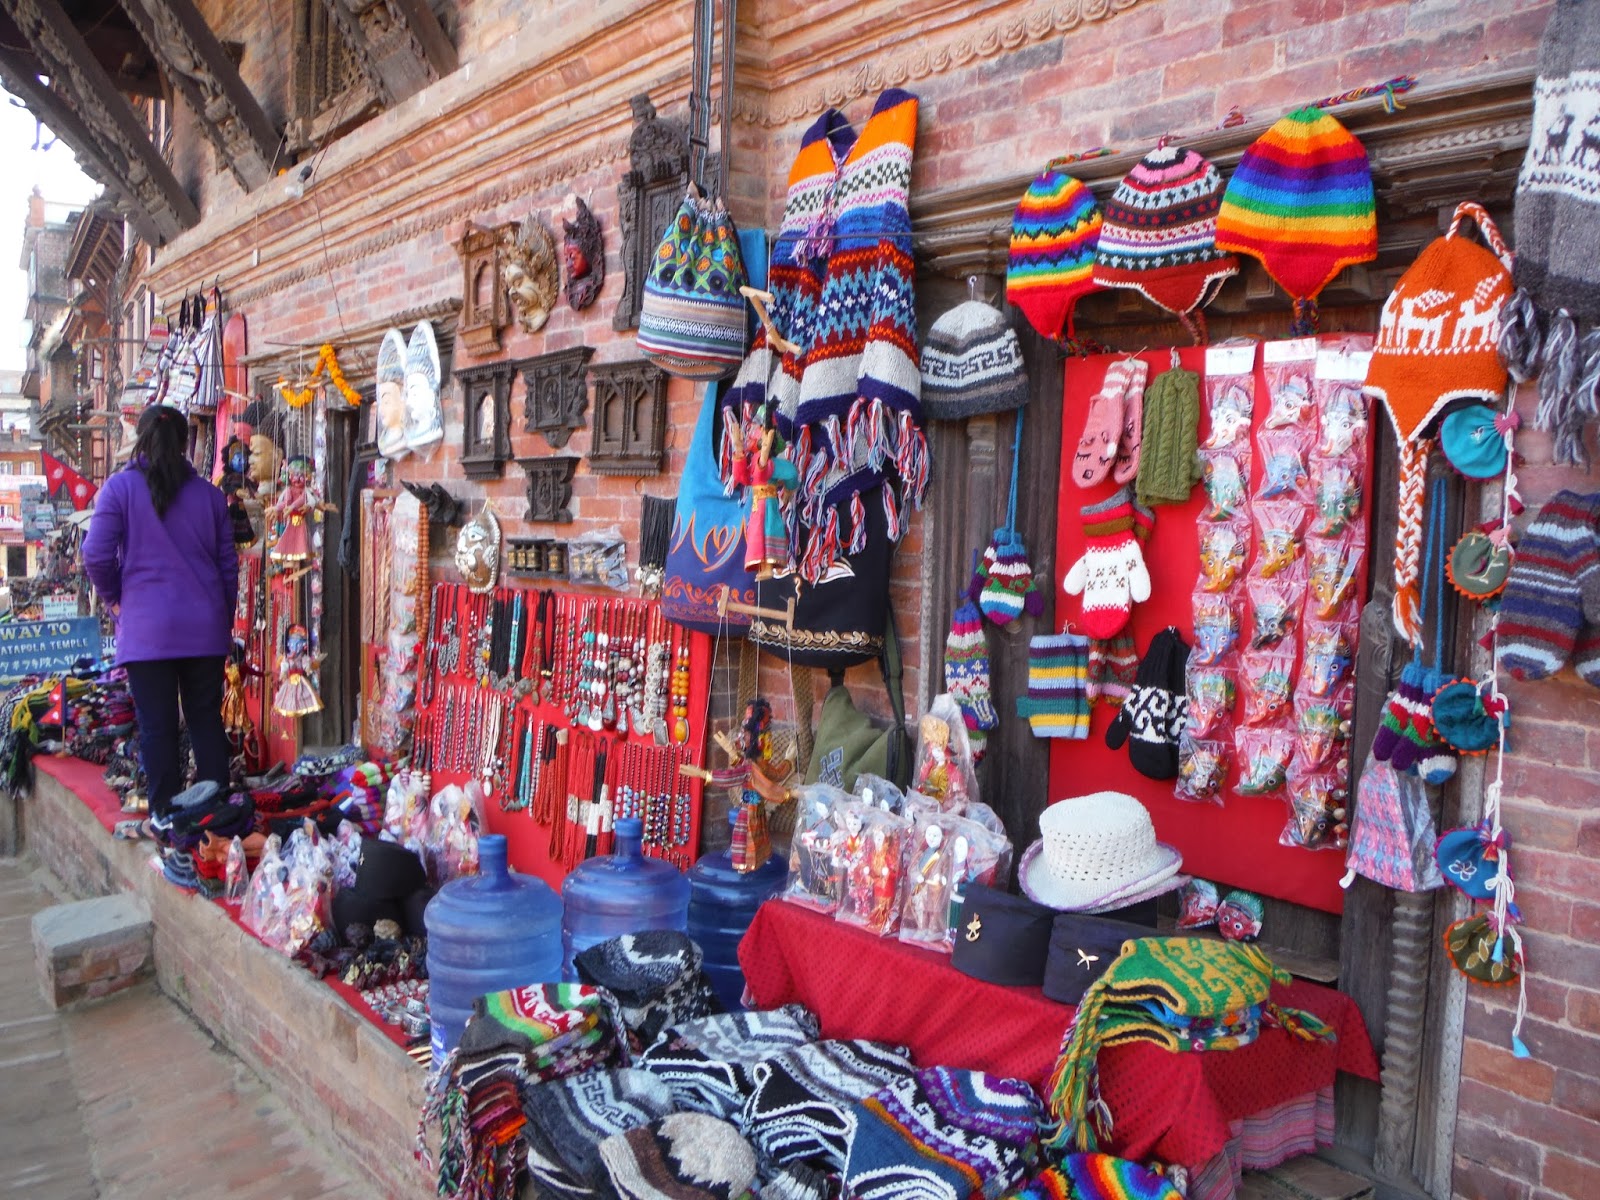 Ann Marcer in Nepal: A little bit of shopping